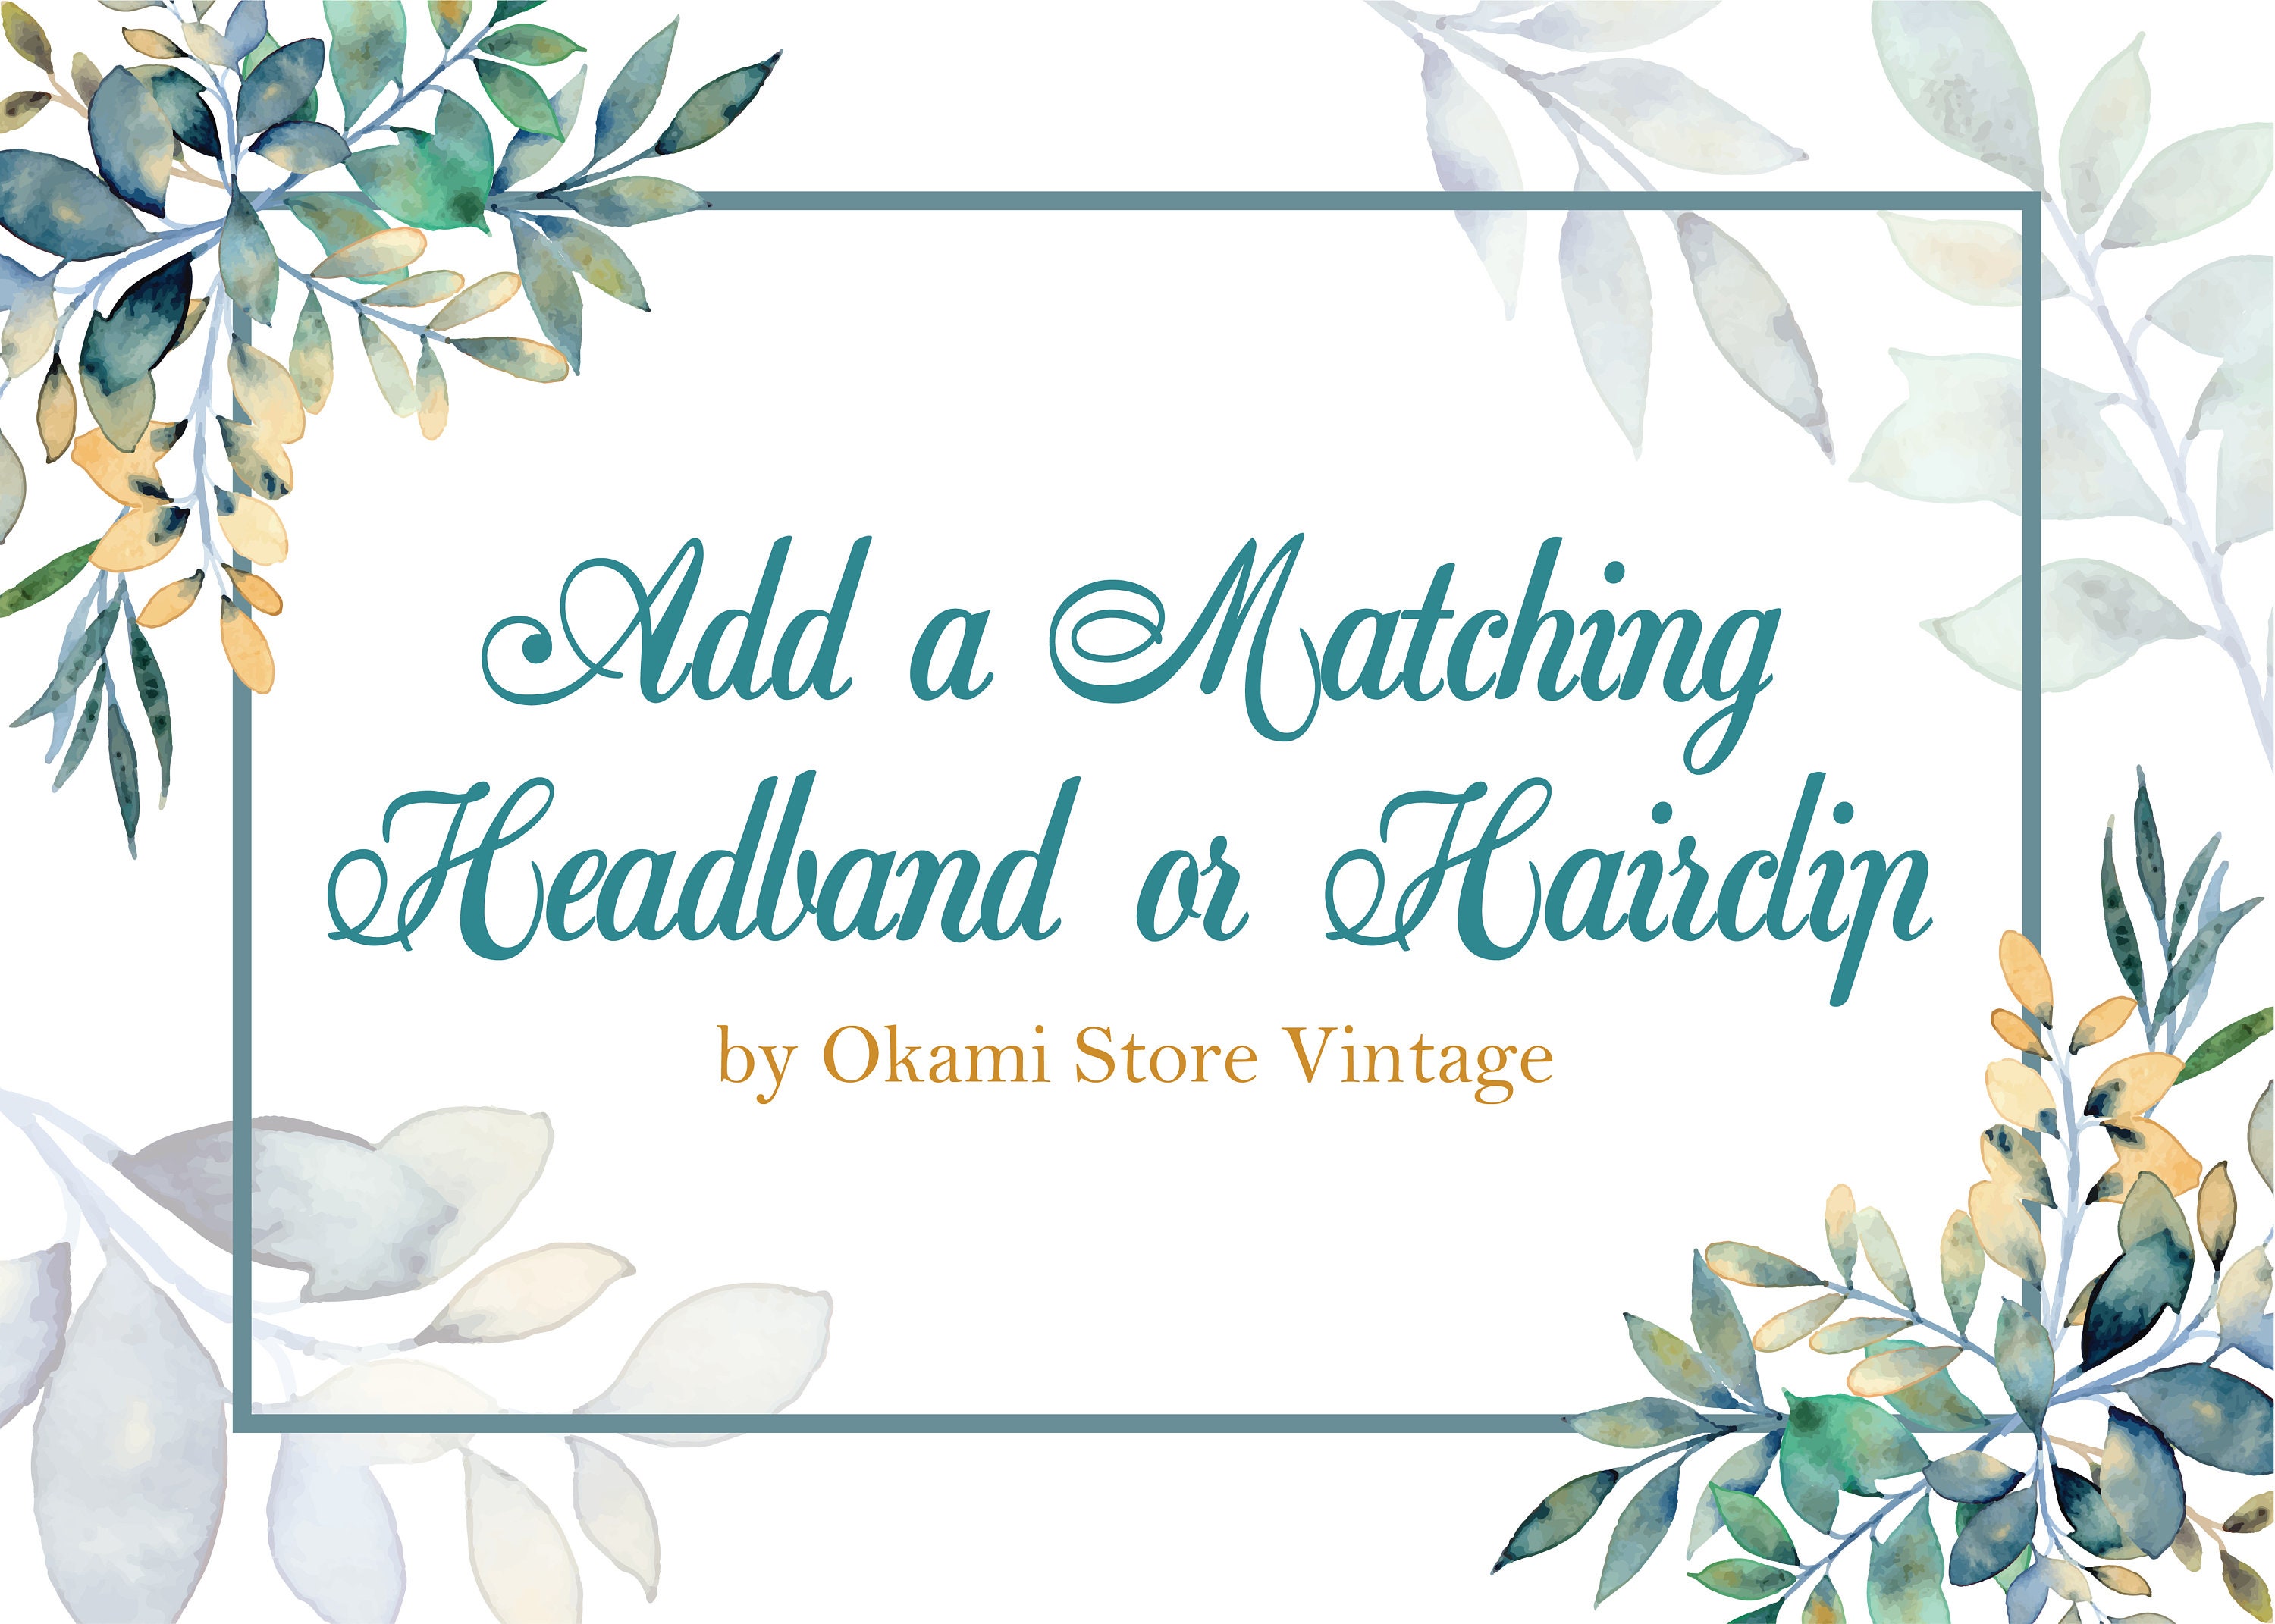 Add matching hair clip or headband - Okami store vintage custom